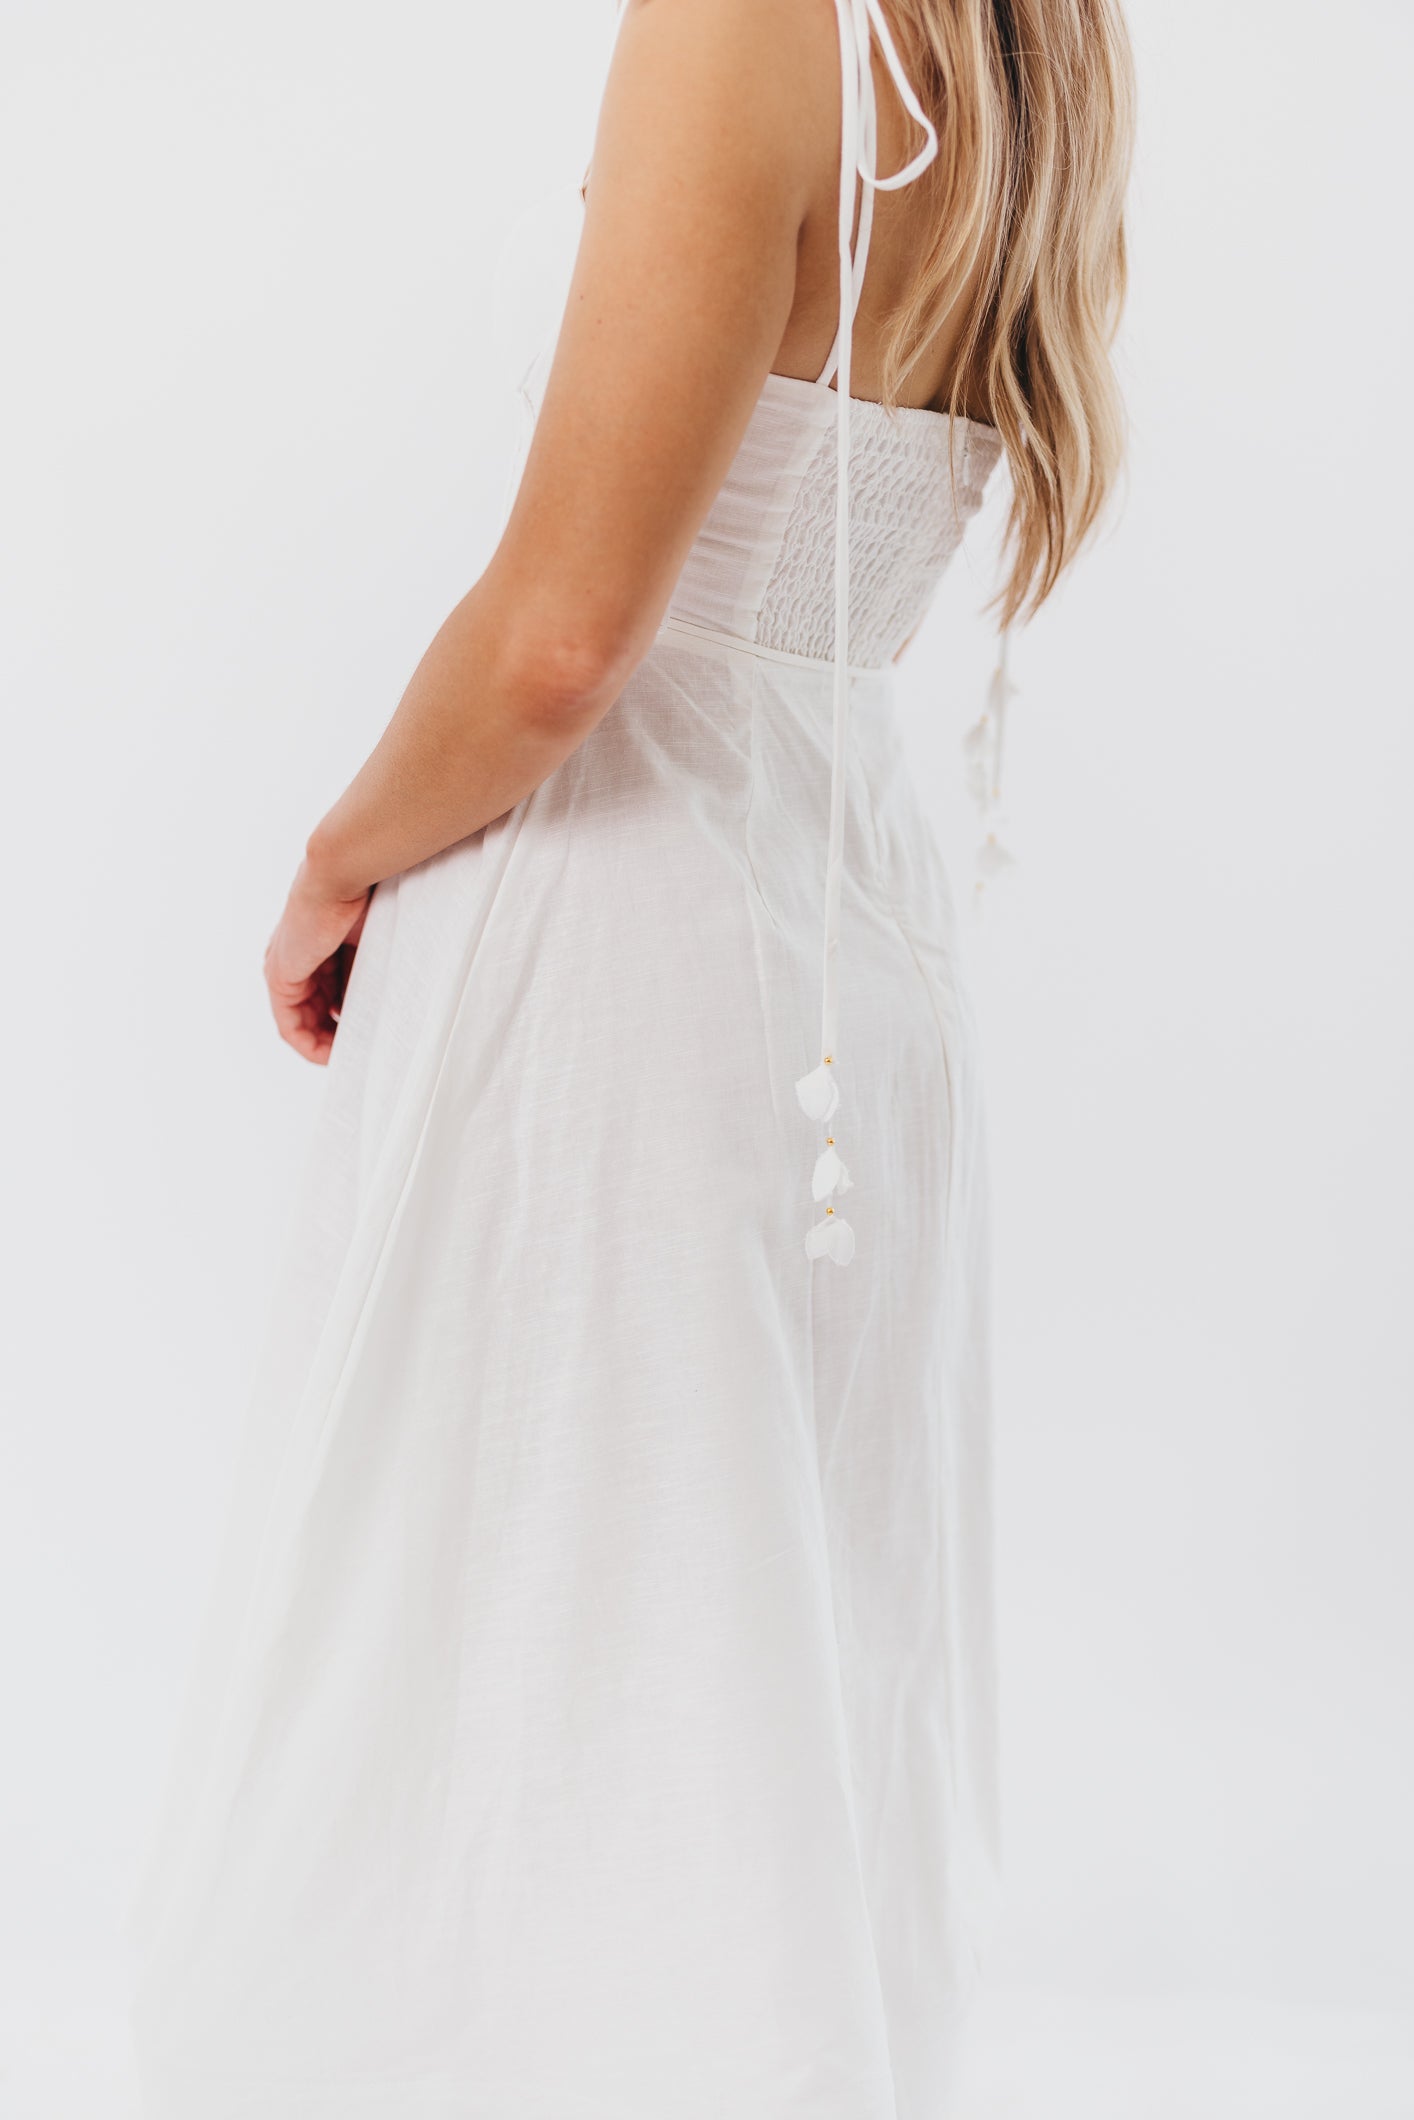 Norma Jean Bustier-Style Midi Dress in White